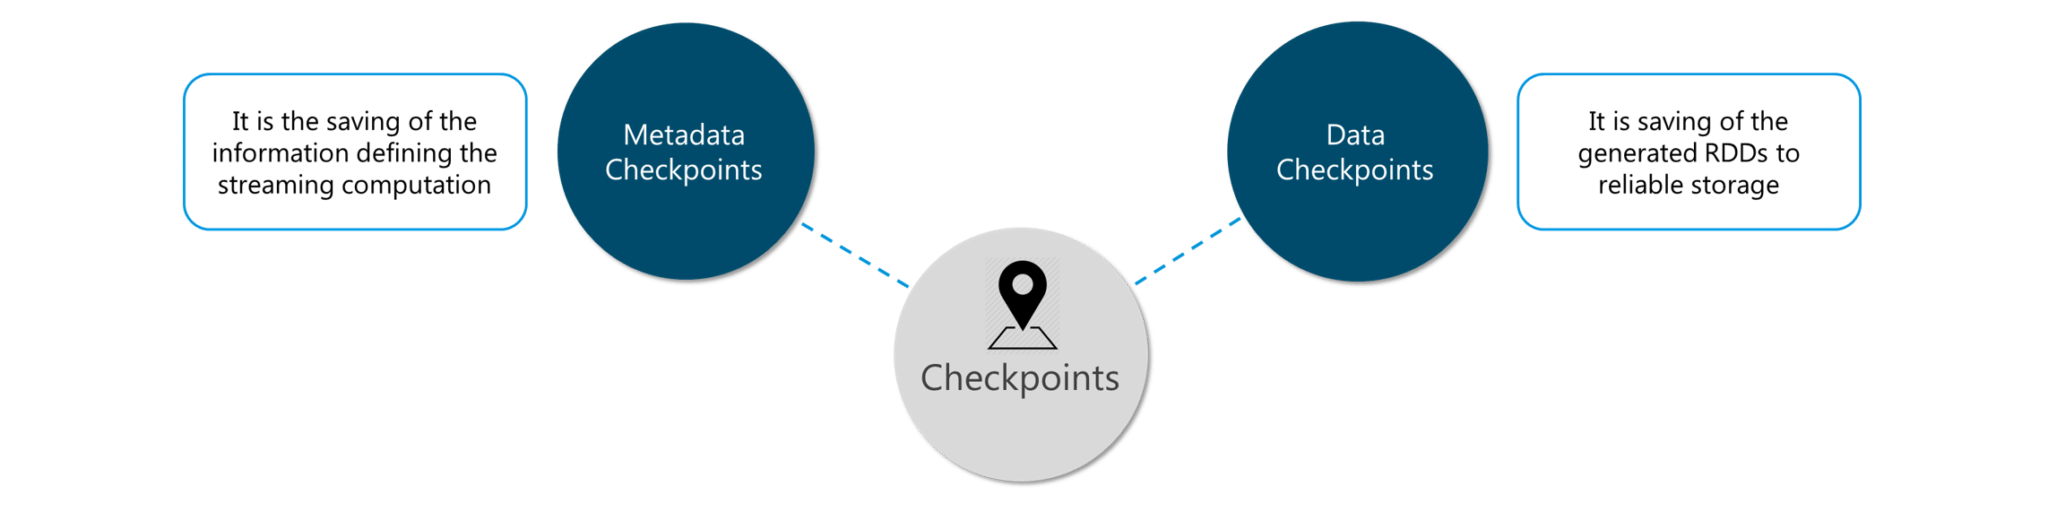 Checkpoints - Spark Streaming - Edureka